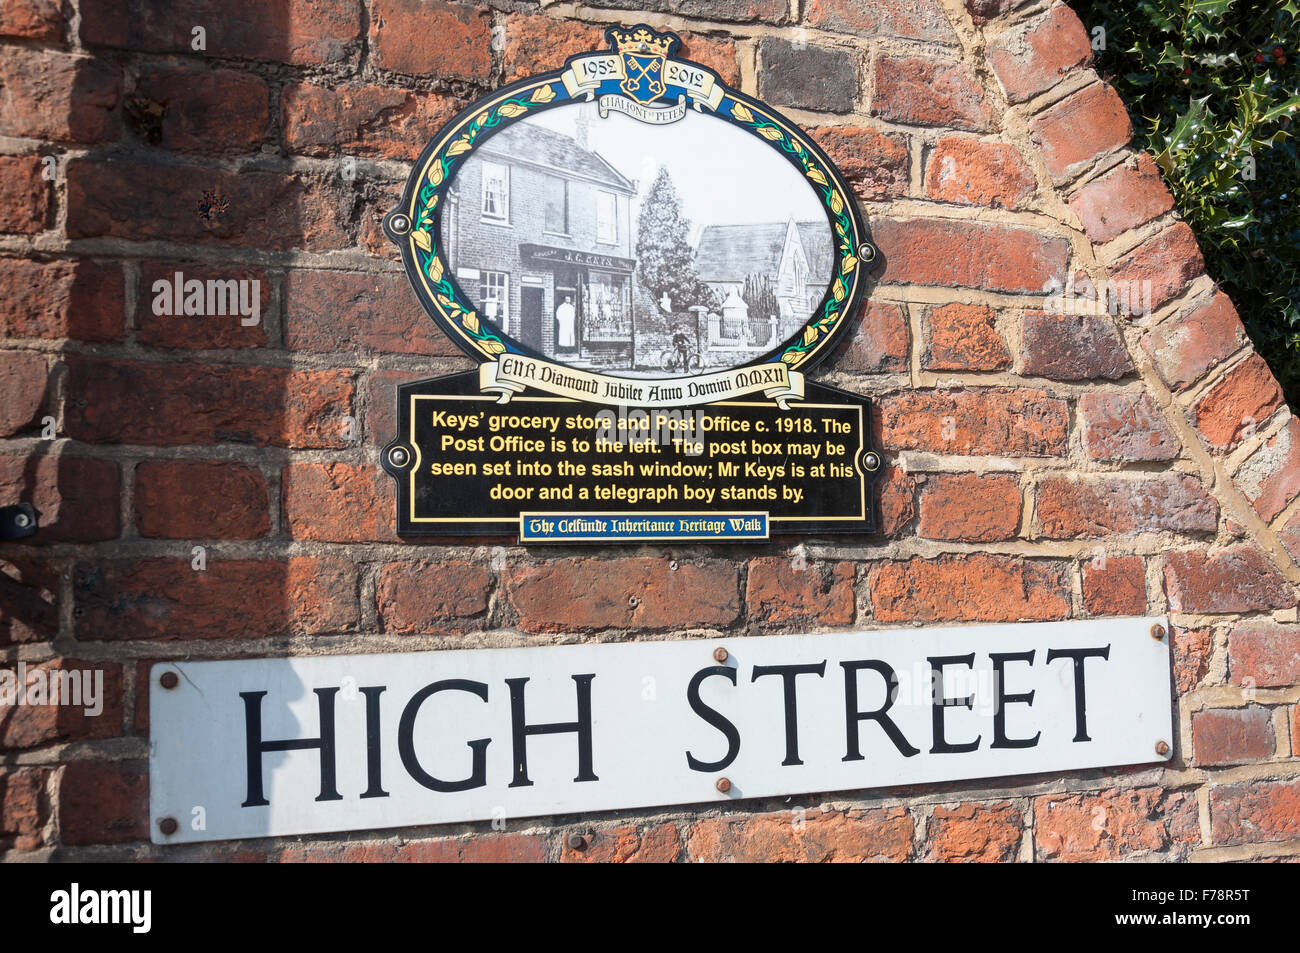 Villaggio heritage e High Street segni, High Street, Chalfont St Peter, Buckinghamshire, Inghilterra, Regno Unito Foto Stock